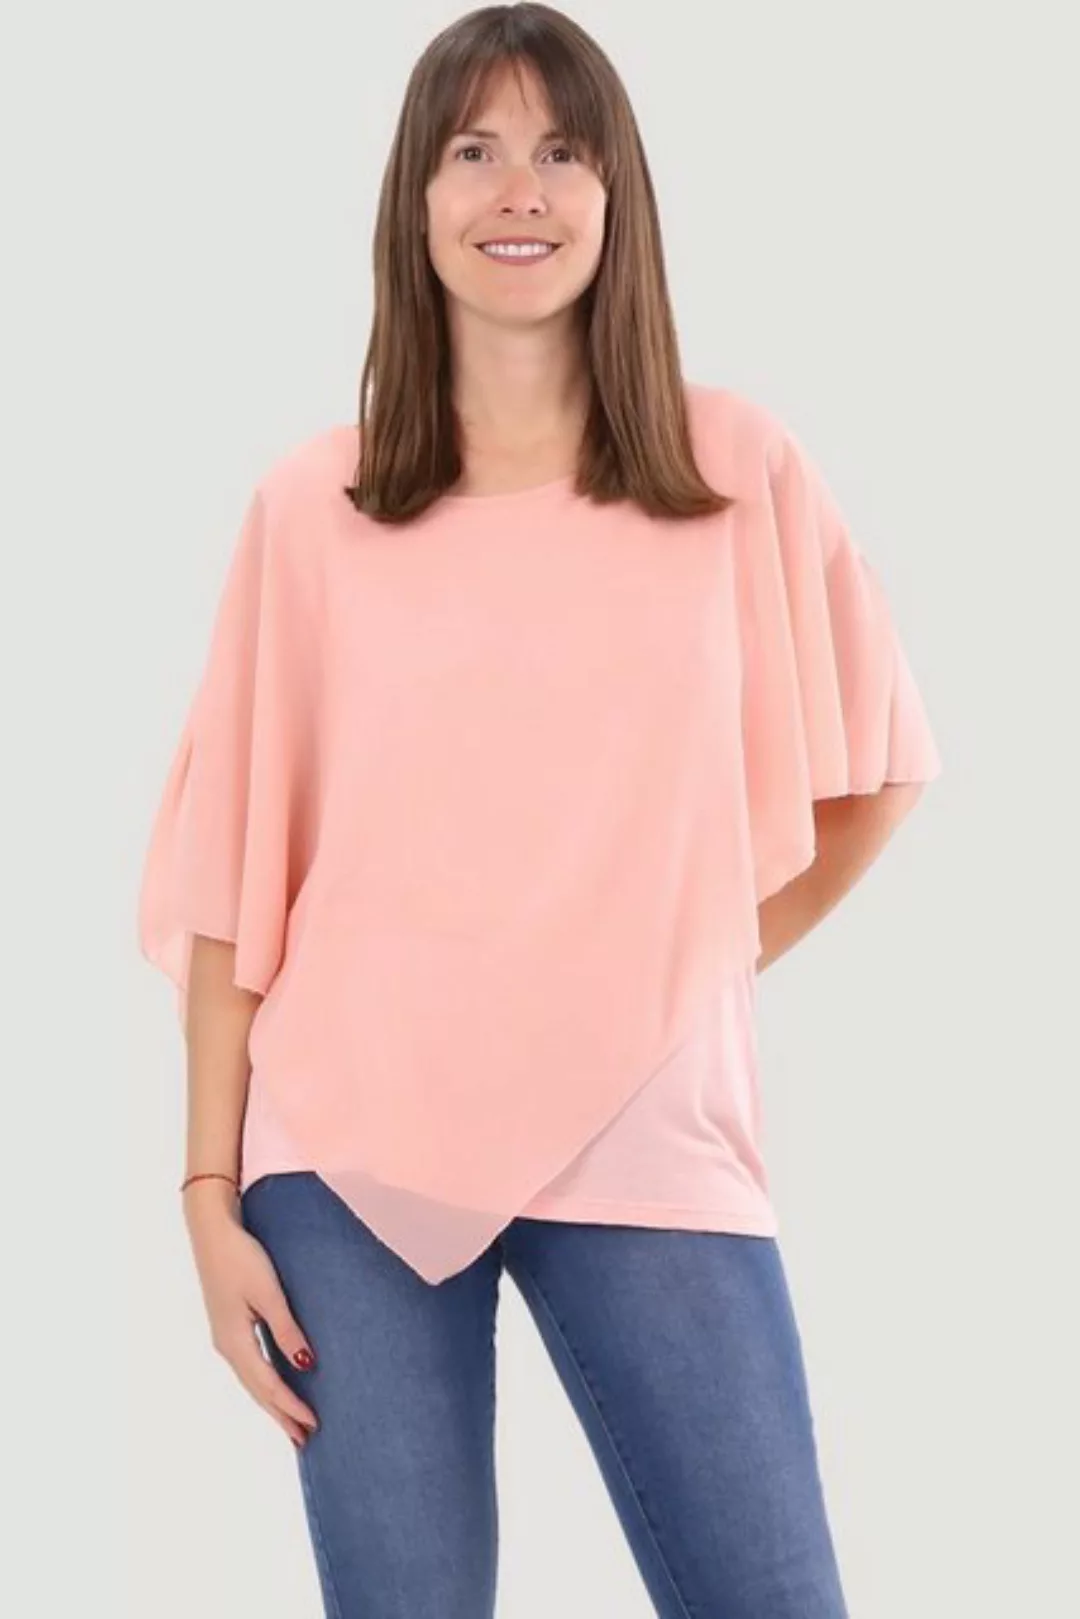 malito more than fashion Chiffonbluse 10732 Schlupfbluse Blusenshirt asymme günstig online kaufen